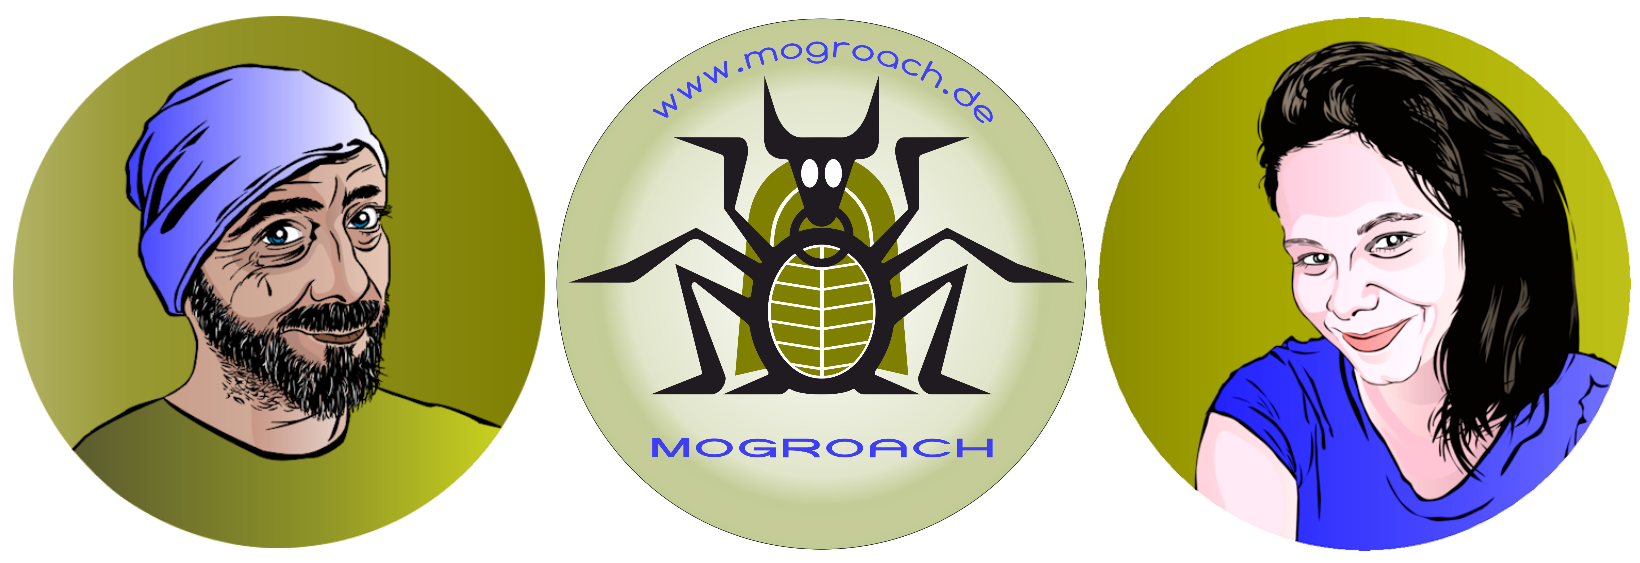 Mogroach Leben im Koffer Reiseberichte Blog